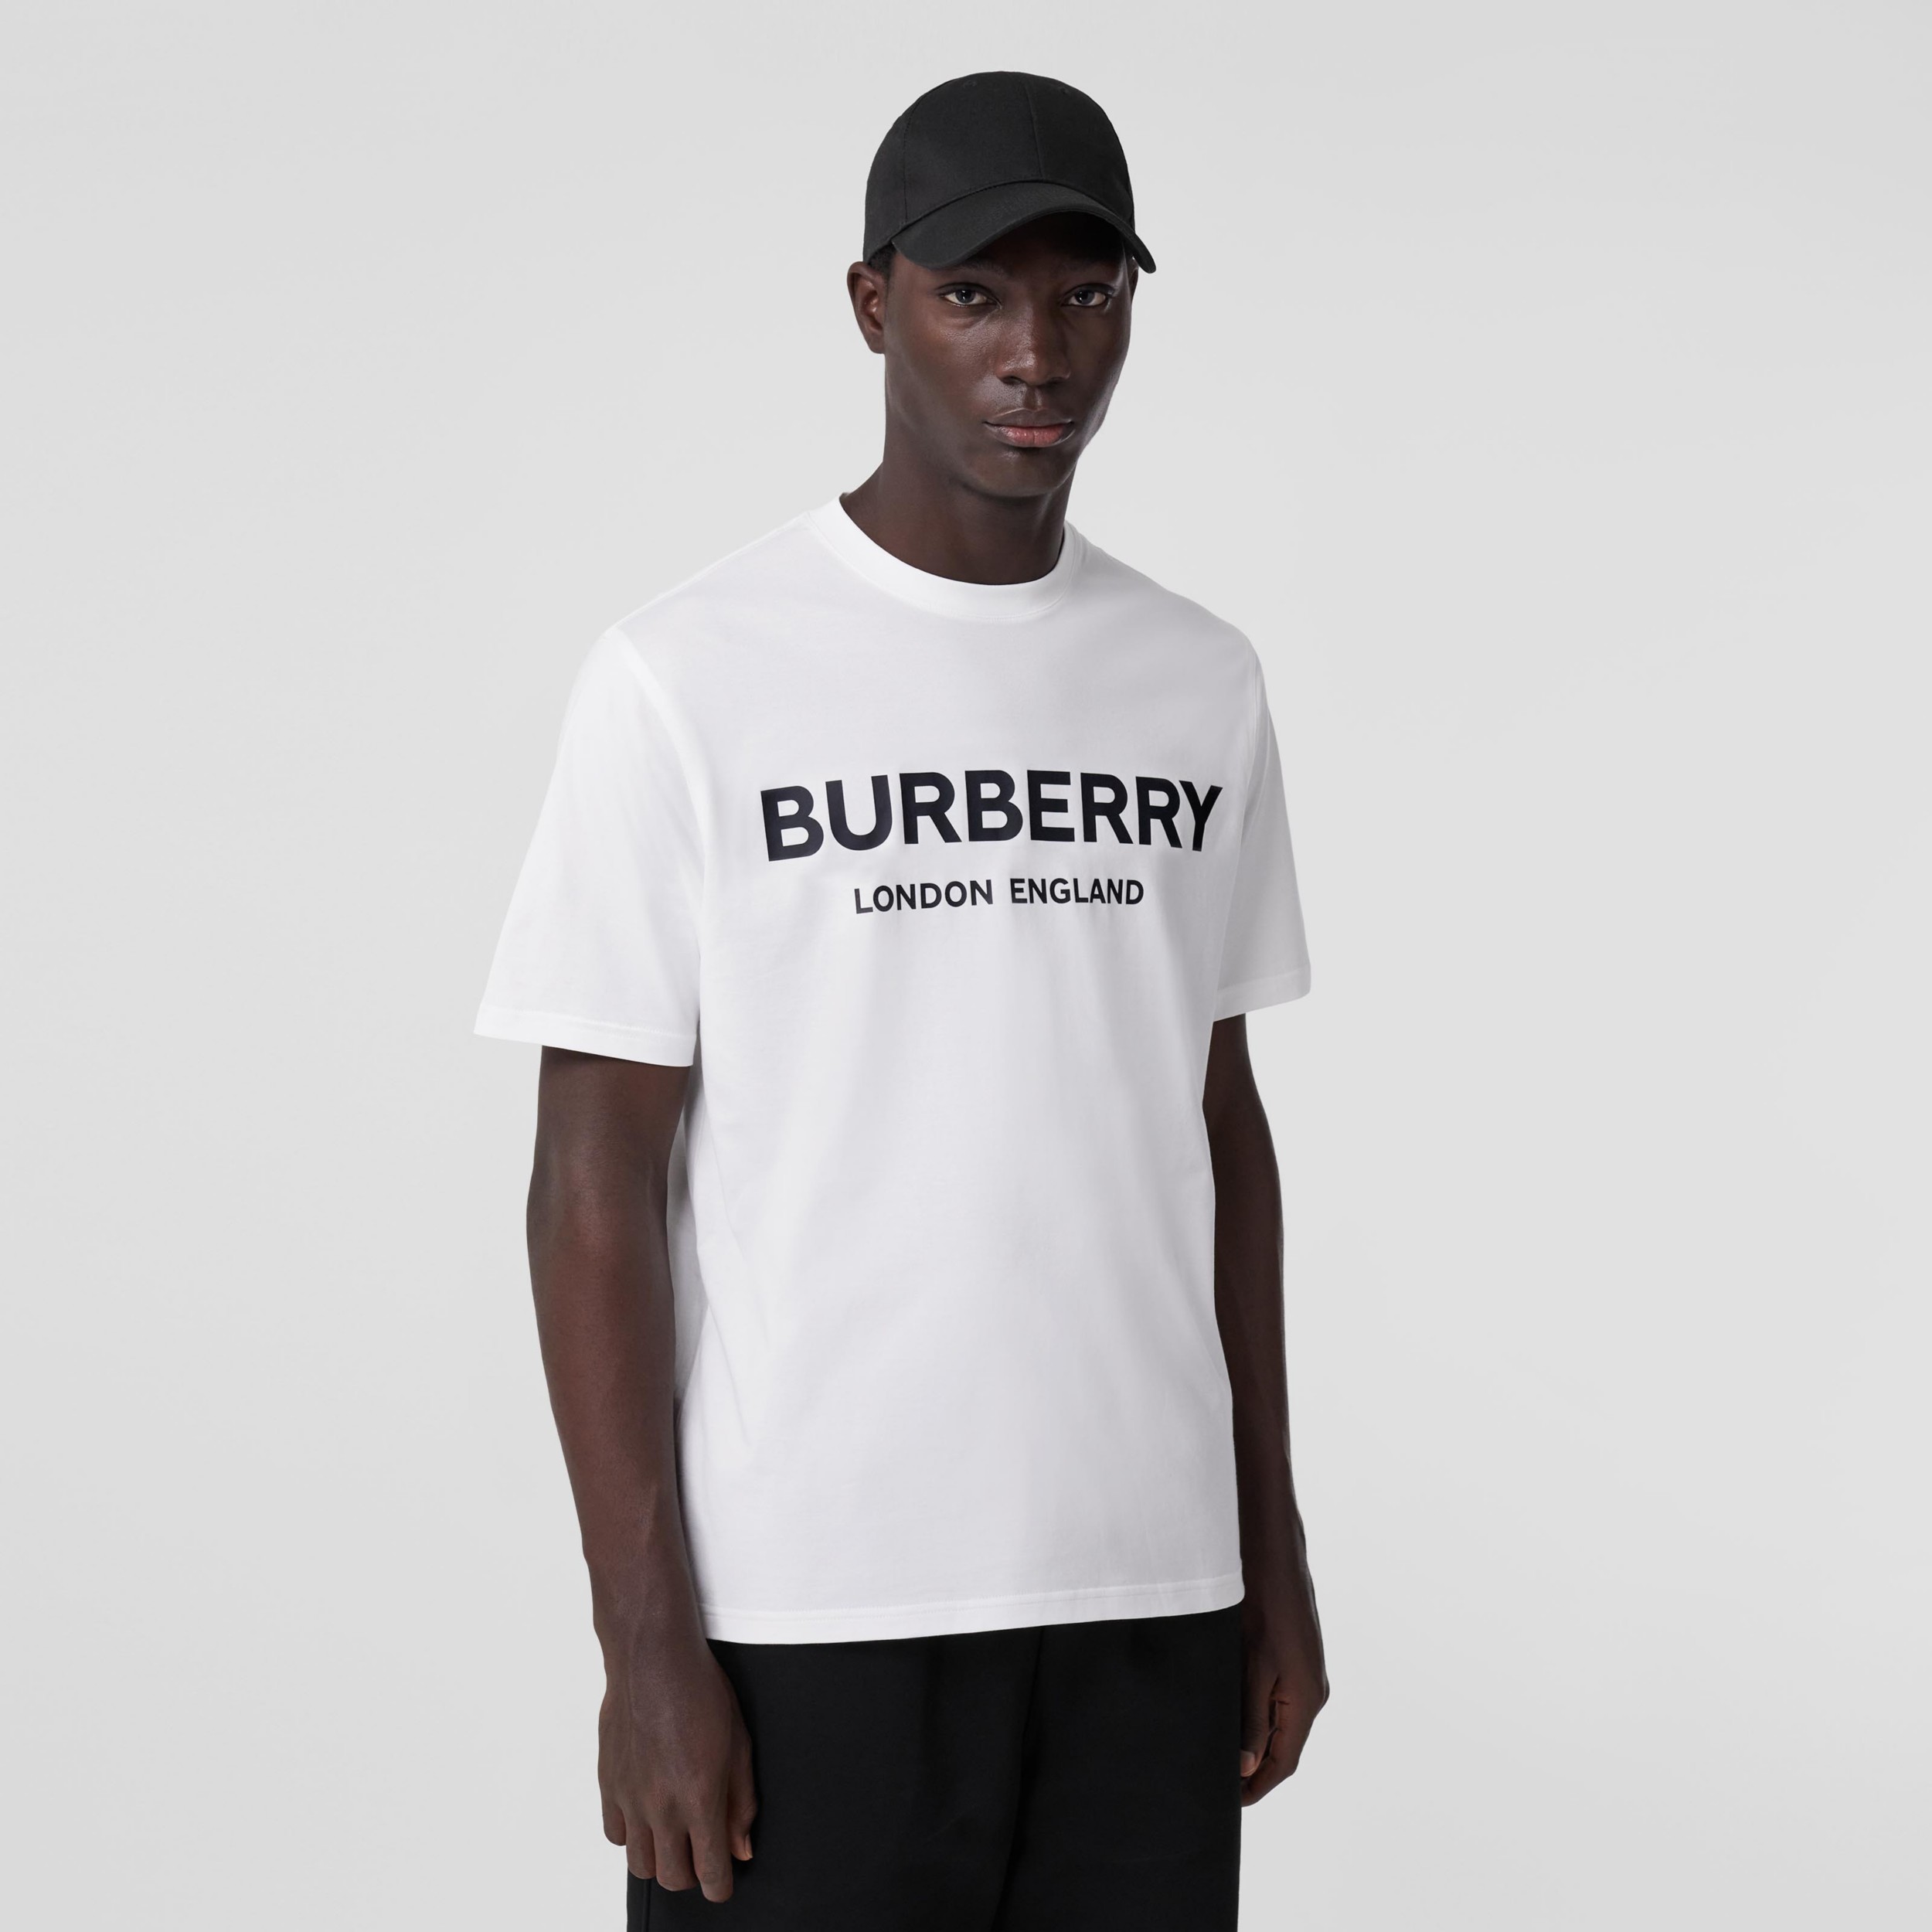 Actualizar 53+ imagen burberry london t shirt mens